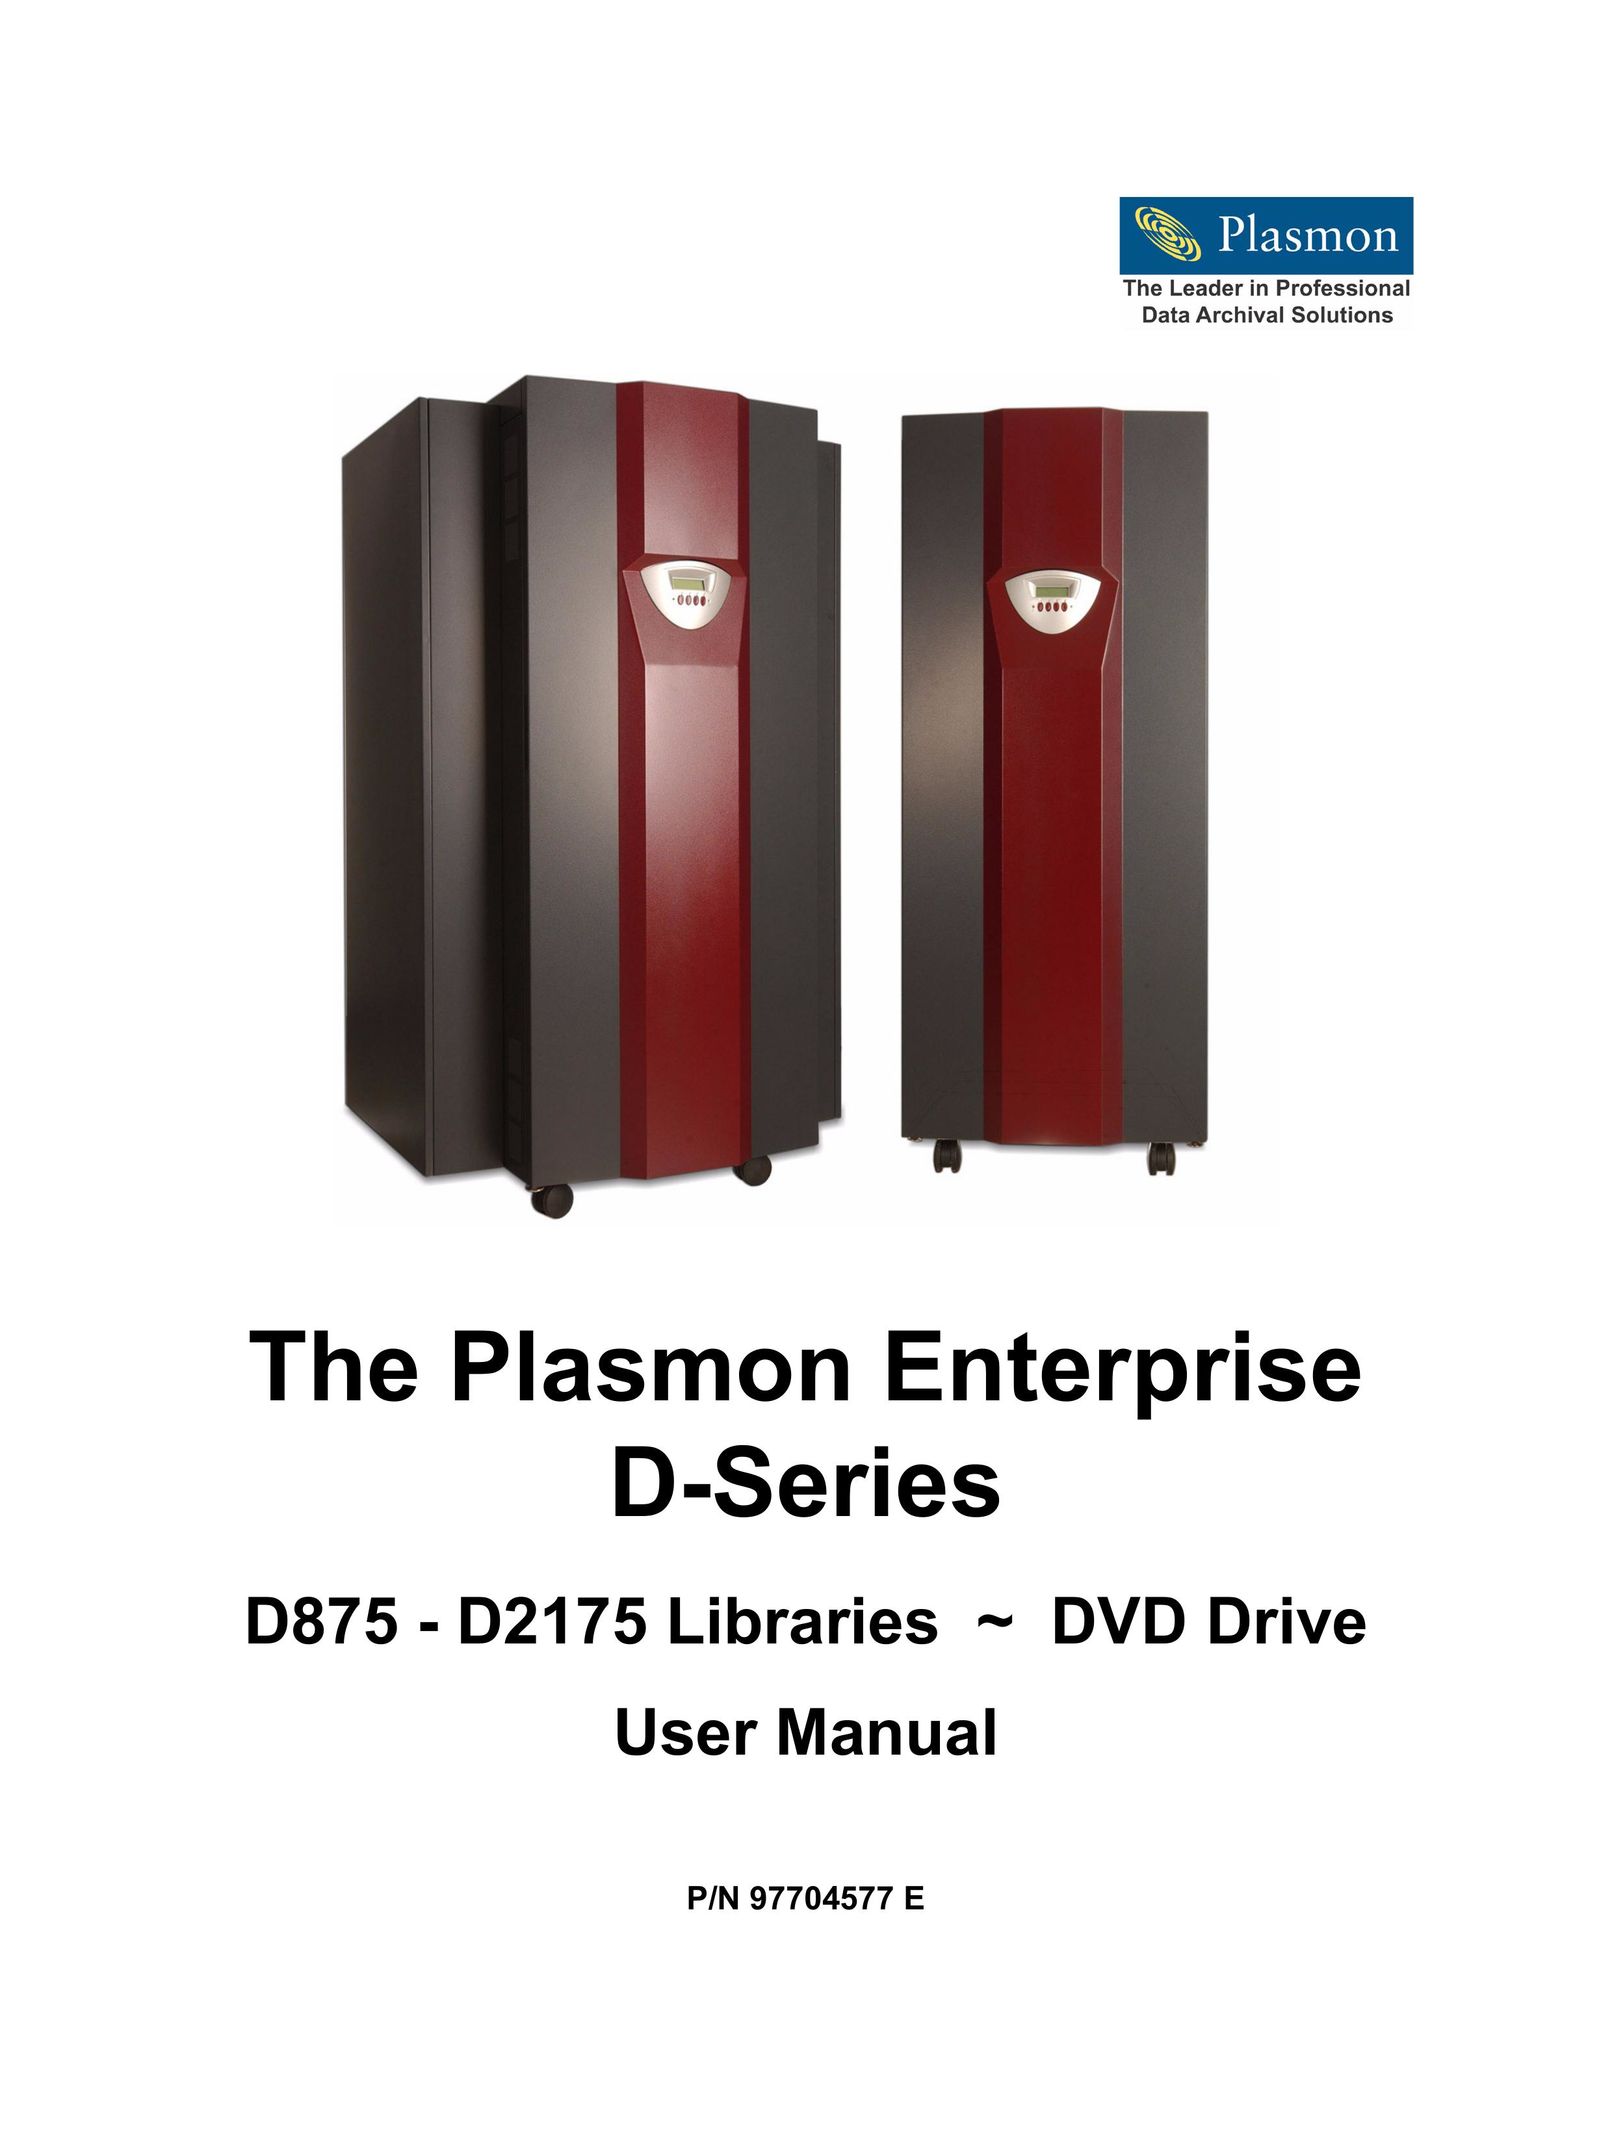 Plasmon D2175 DVD Player User Manual